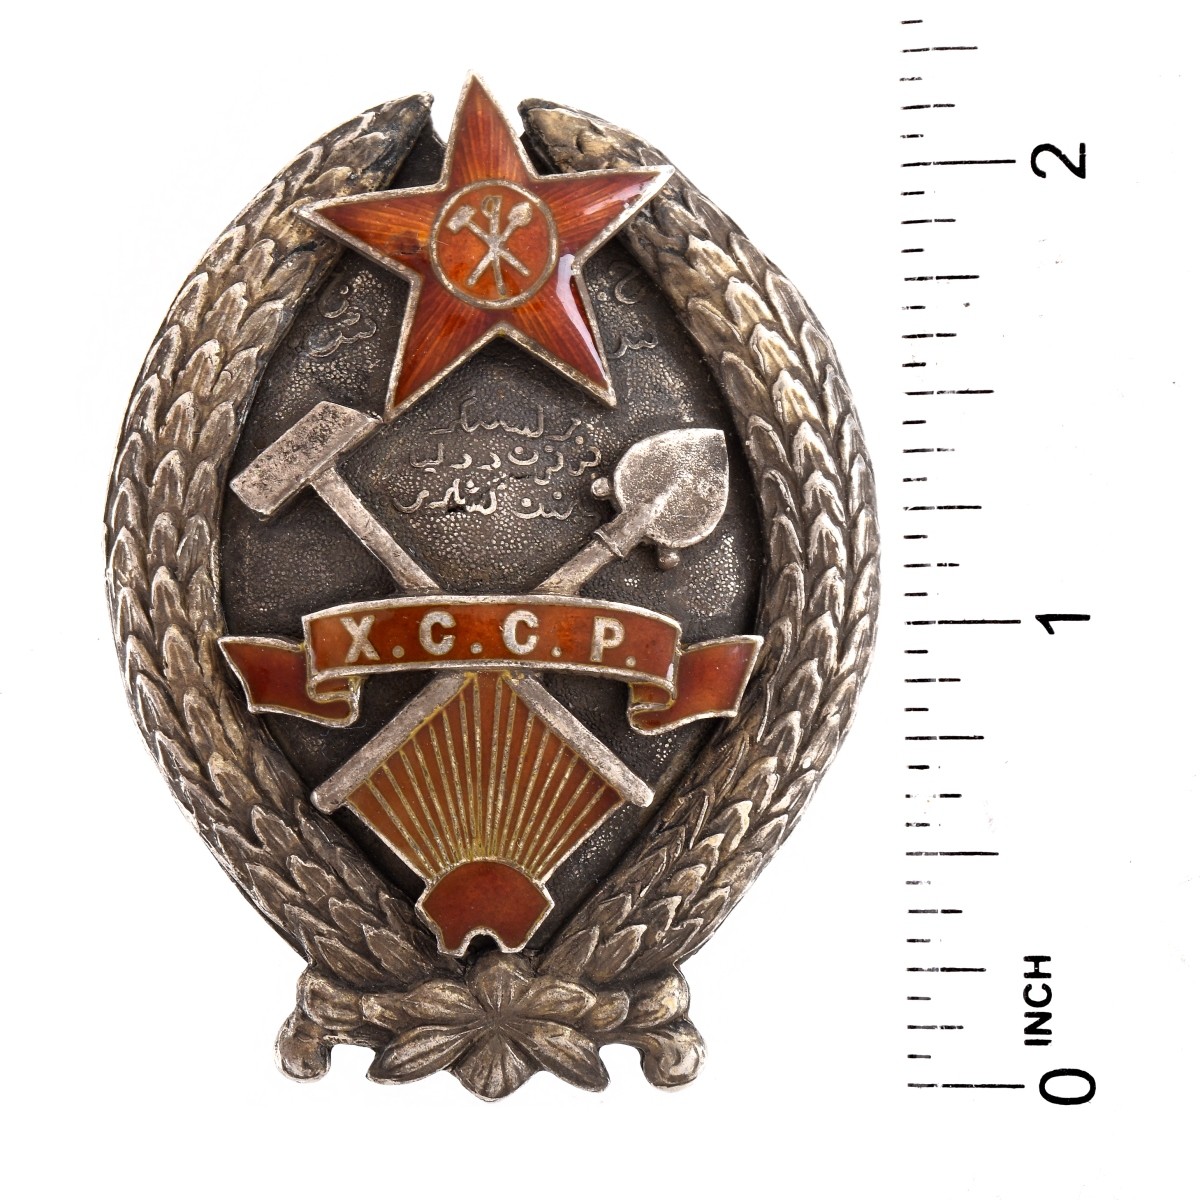 Russian-Muslim Silver and Enamel Badge